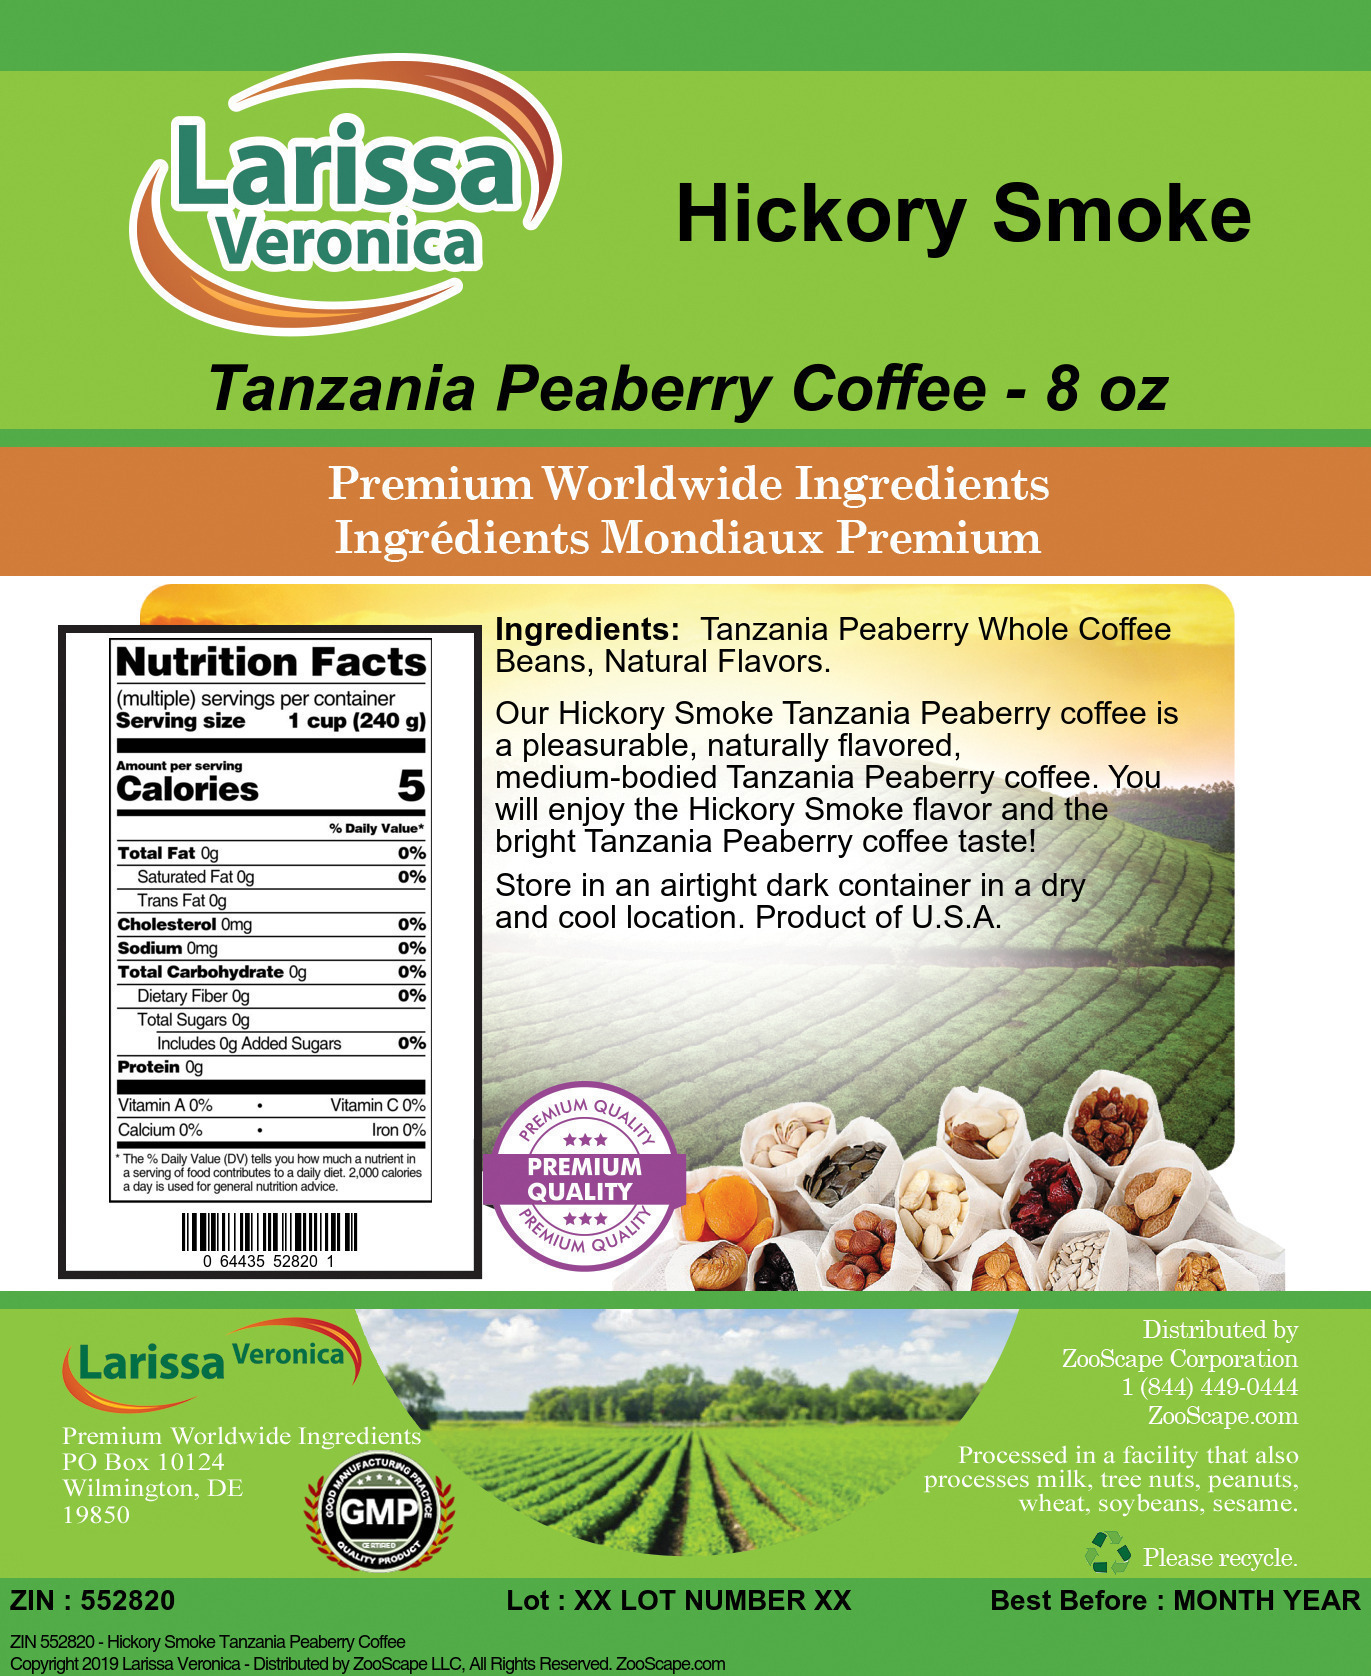 Hickory Smoke Tanzania Peaberry Coffee - Label